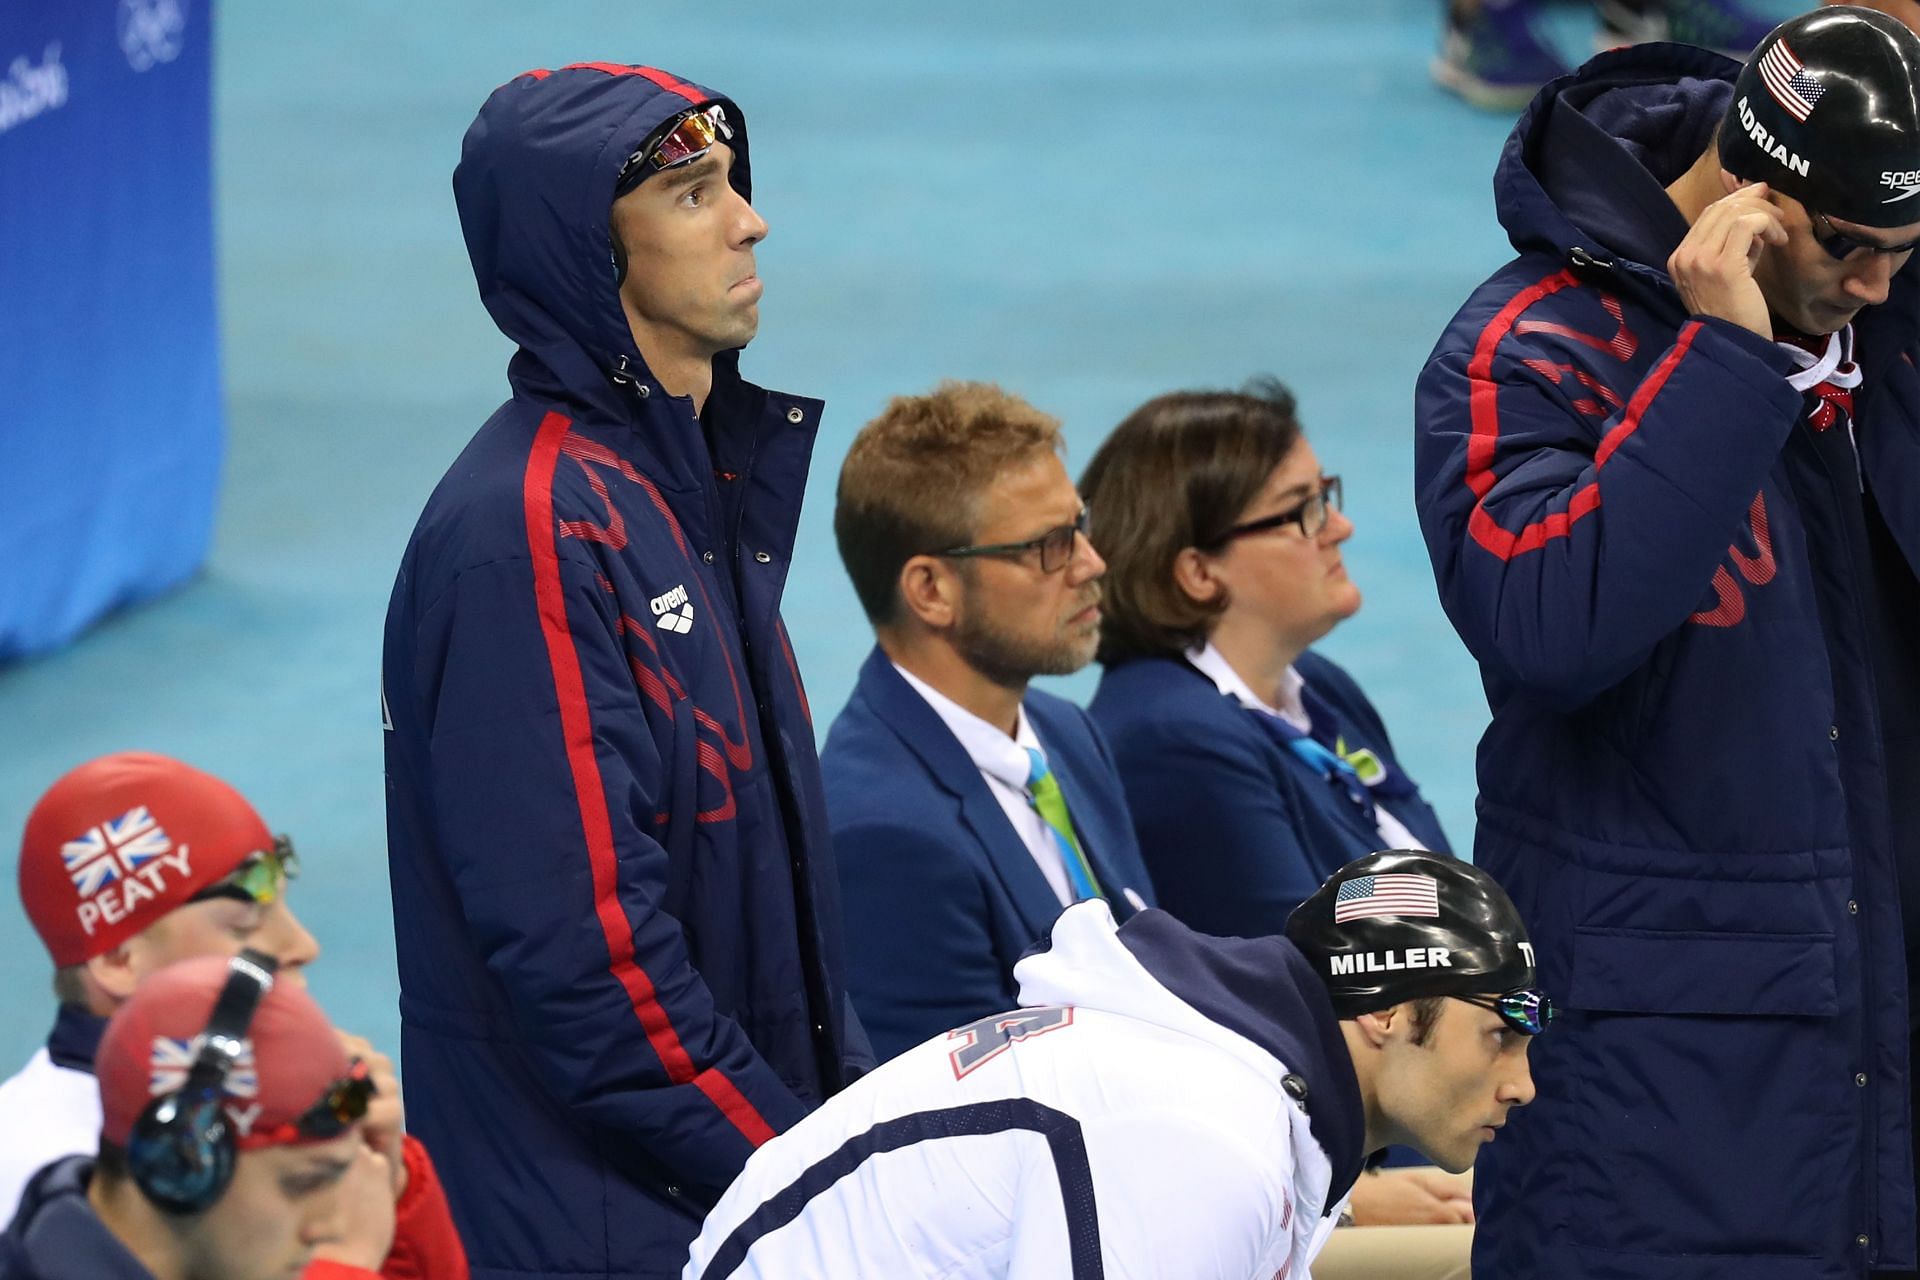 Michael Phelps Swimming - Olympics: Day 8